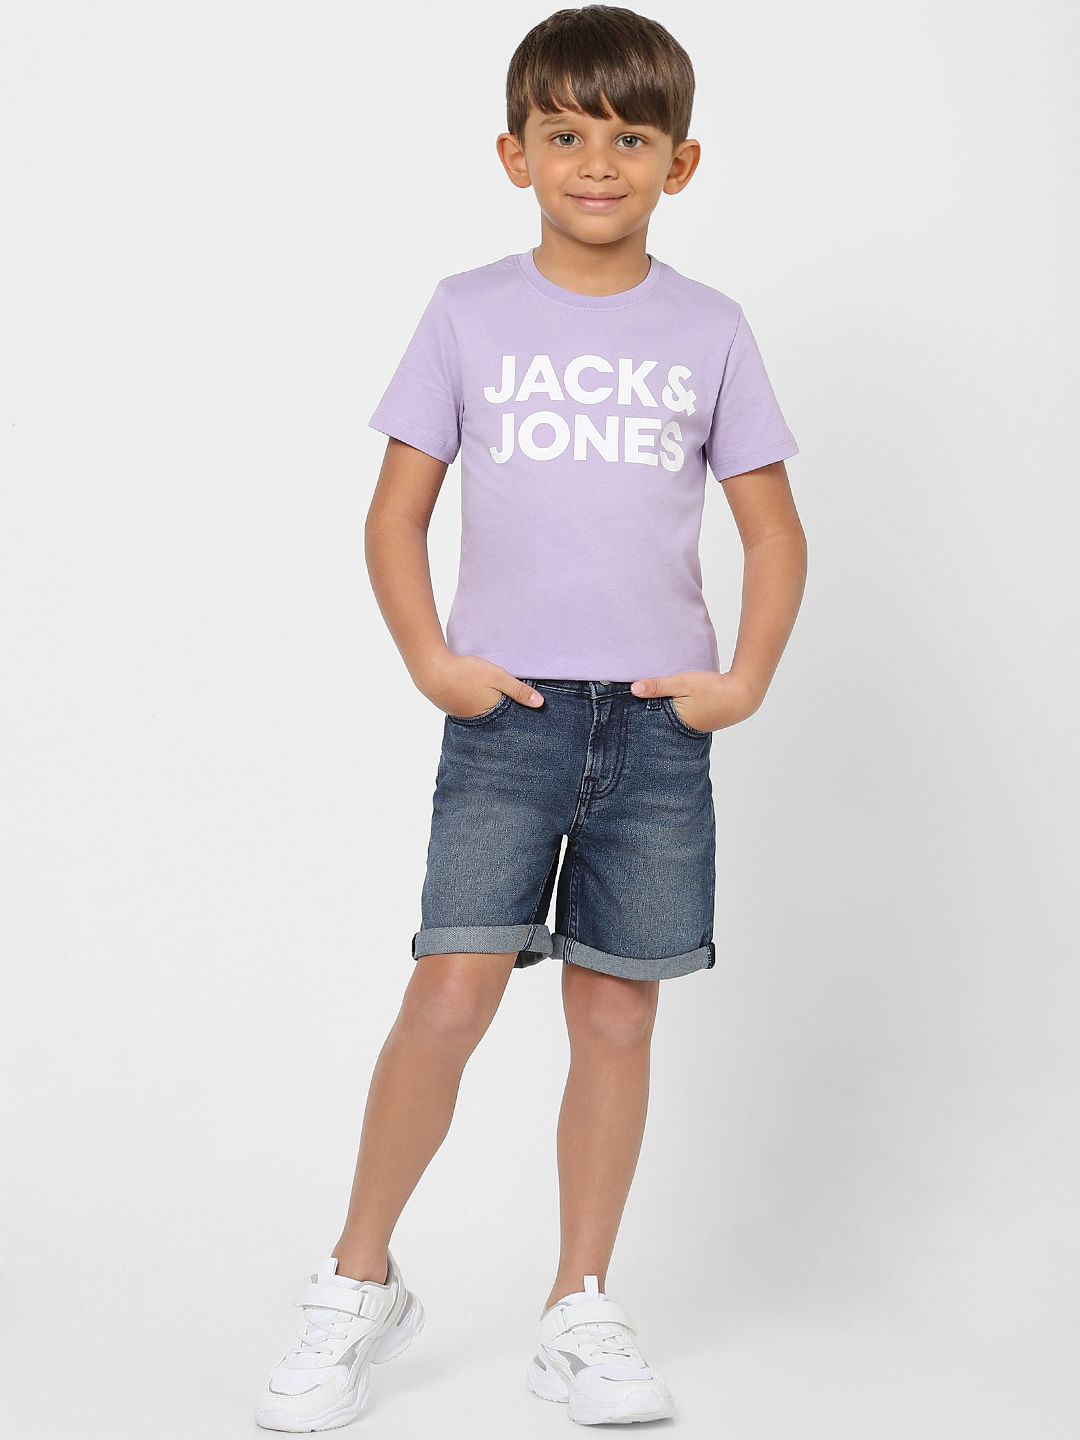 Jack & Jones Denim Shorts Regular Fit Cotton Blended for Men, 657 Blue Denim  | eBay